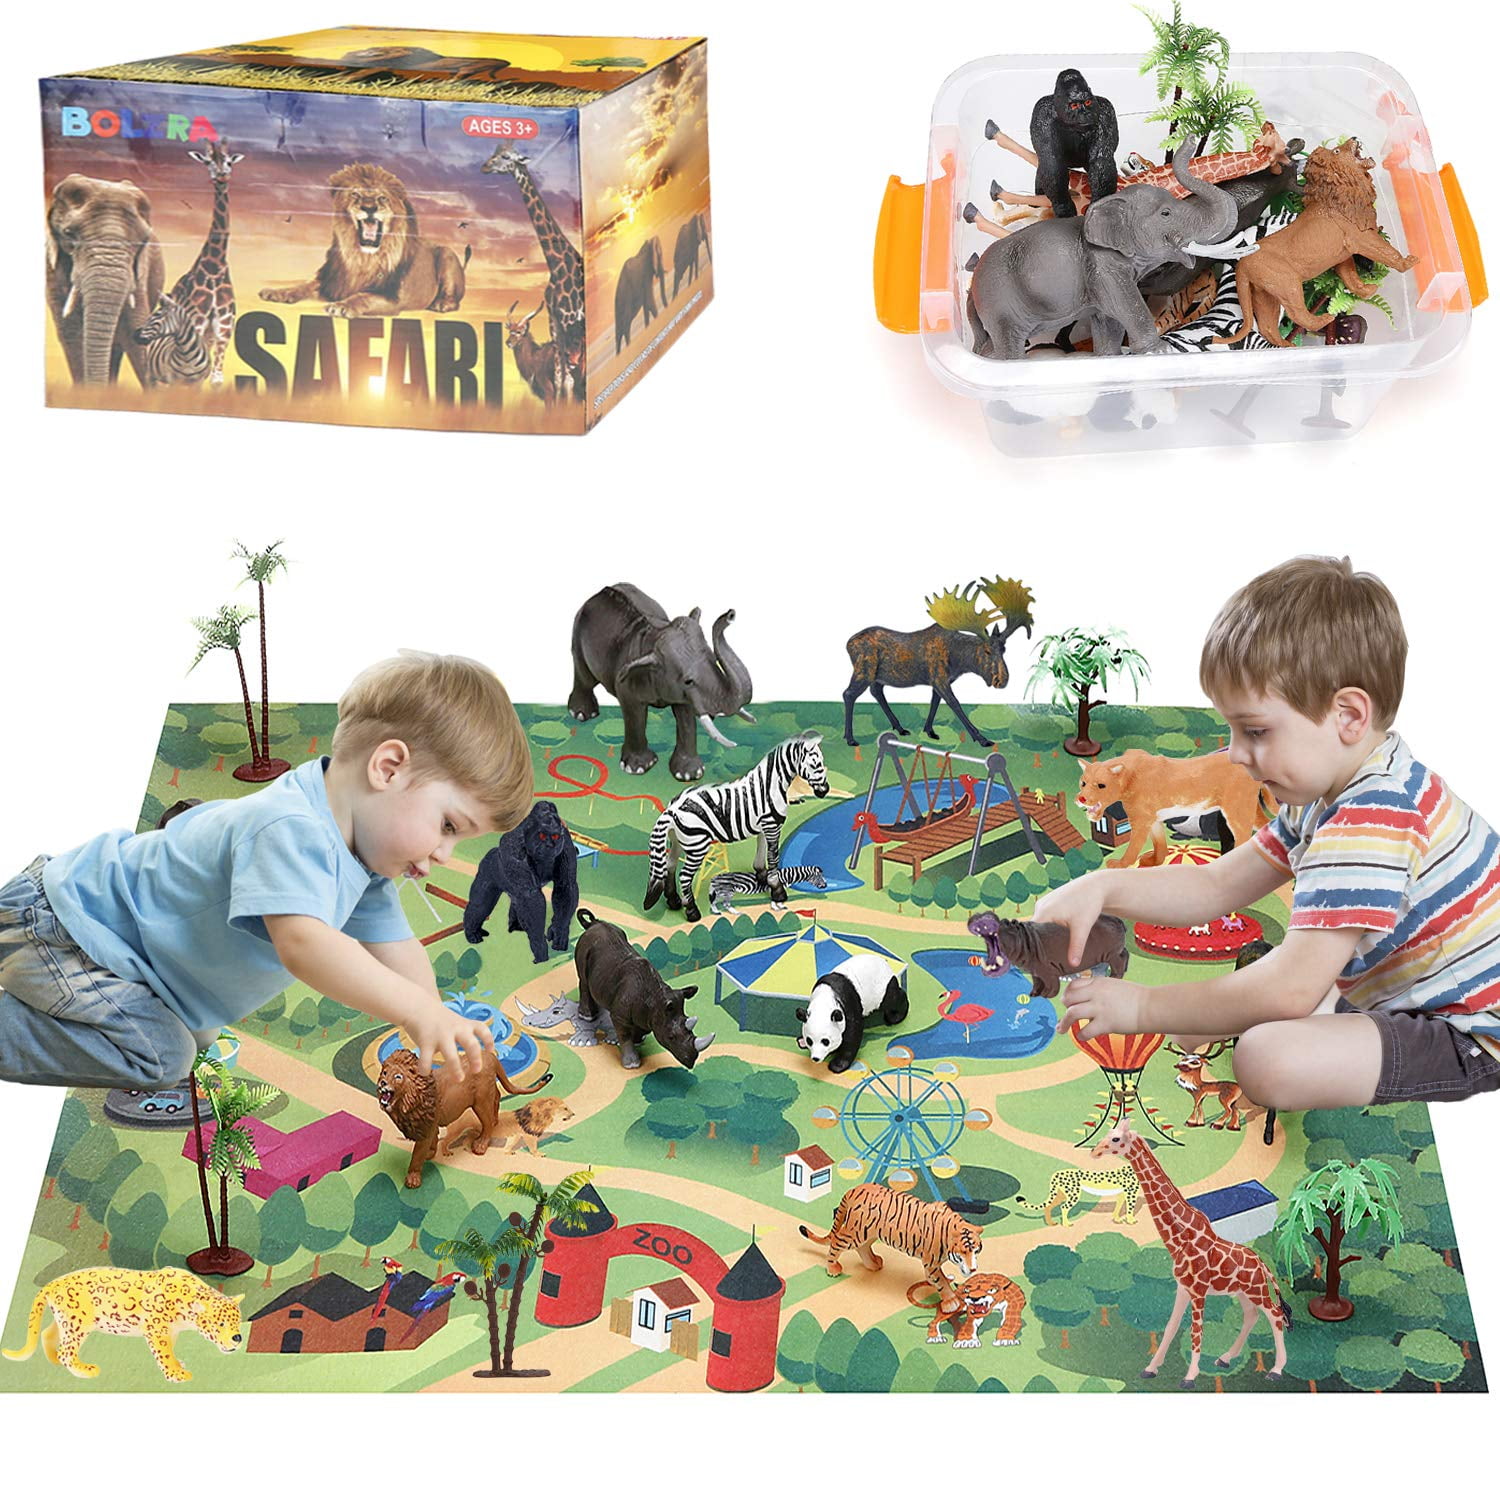 BOLZRA Safari Animals Figurines Toys with Activity Play Mat & Trees,  Realistic Plastic Jungle Wild Zoo Animals Figures Playset with Elephant,  Giraffe, Lion, Gorilla for Kids, Boys & Girls, 22 Piece -